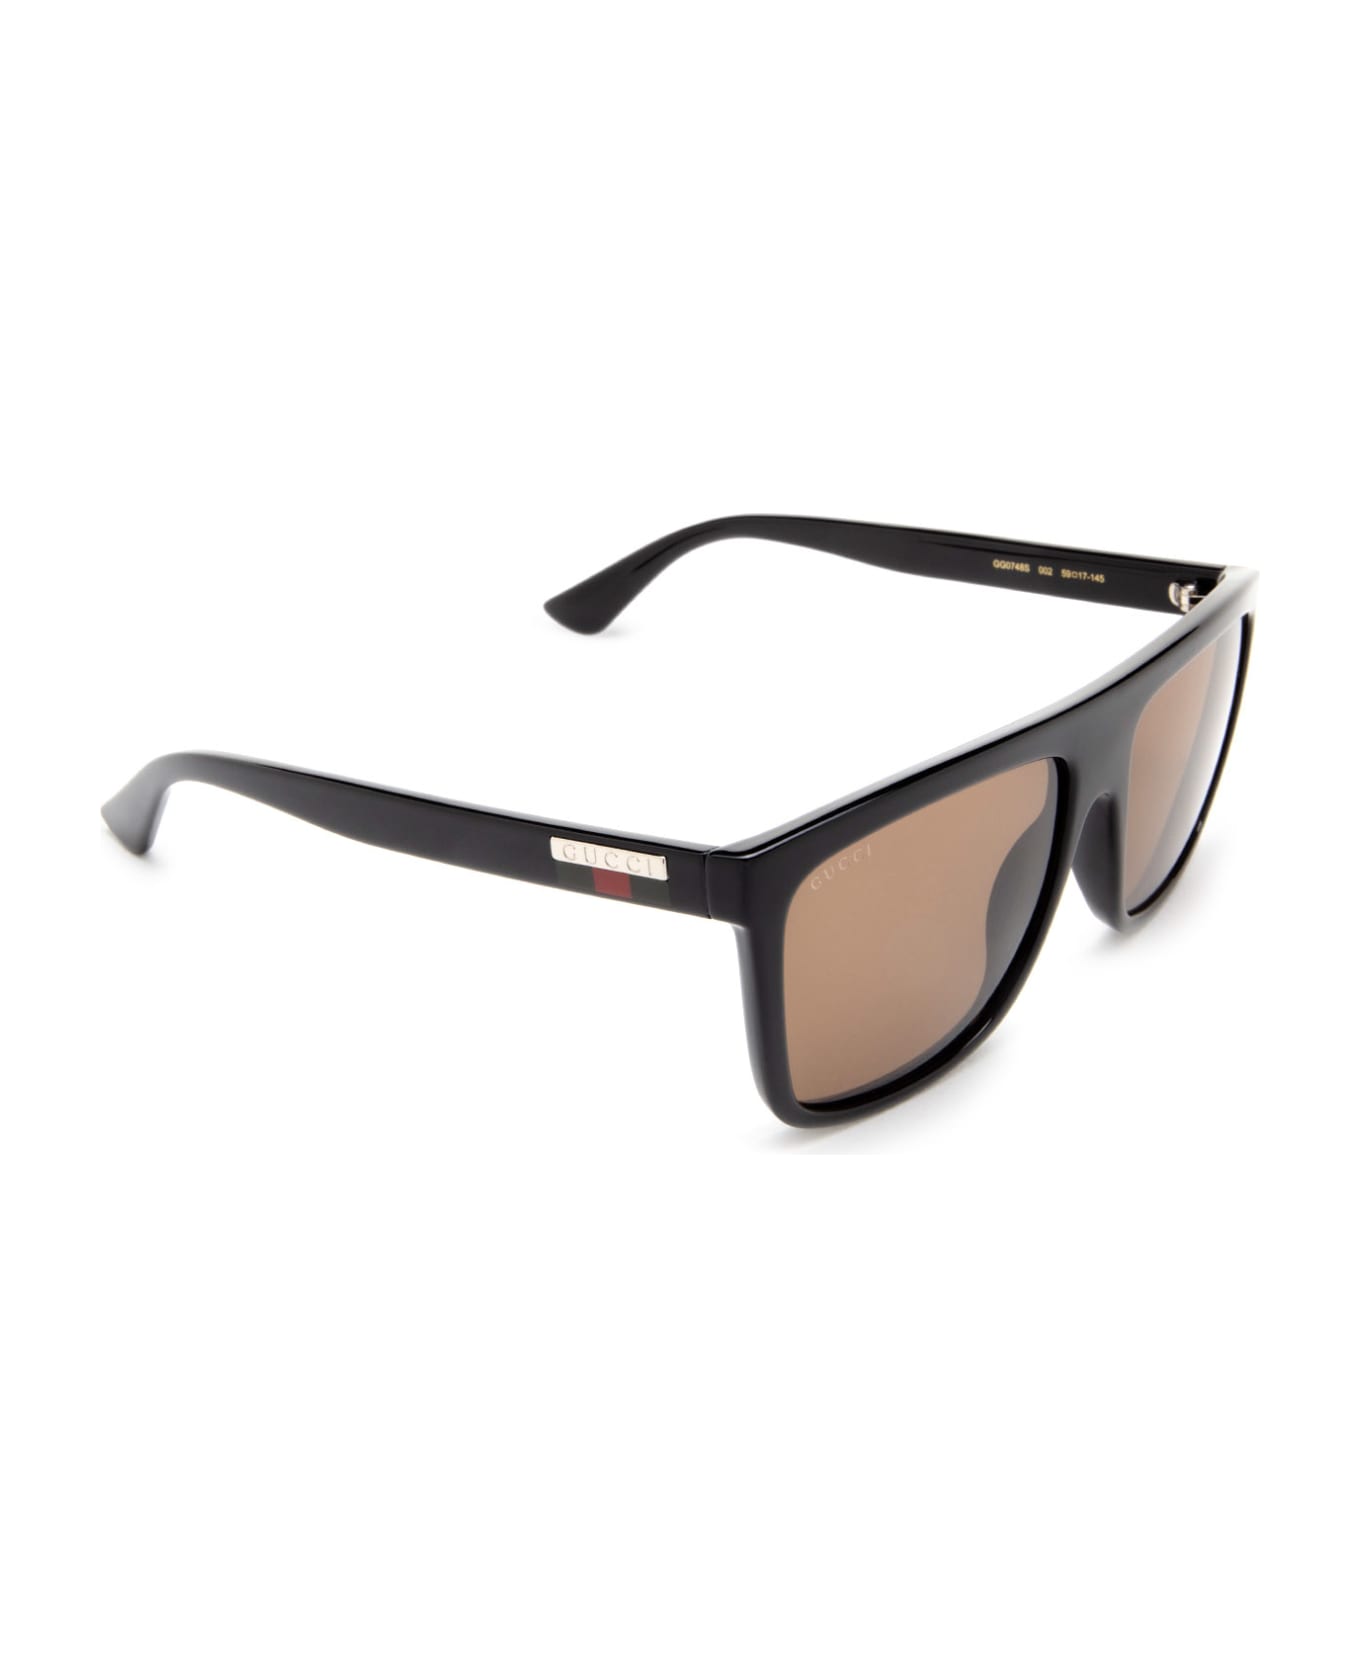 Gucci Eyewear Gg0748s Black Sunglasses - Black サングラス